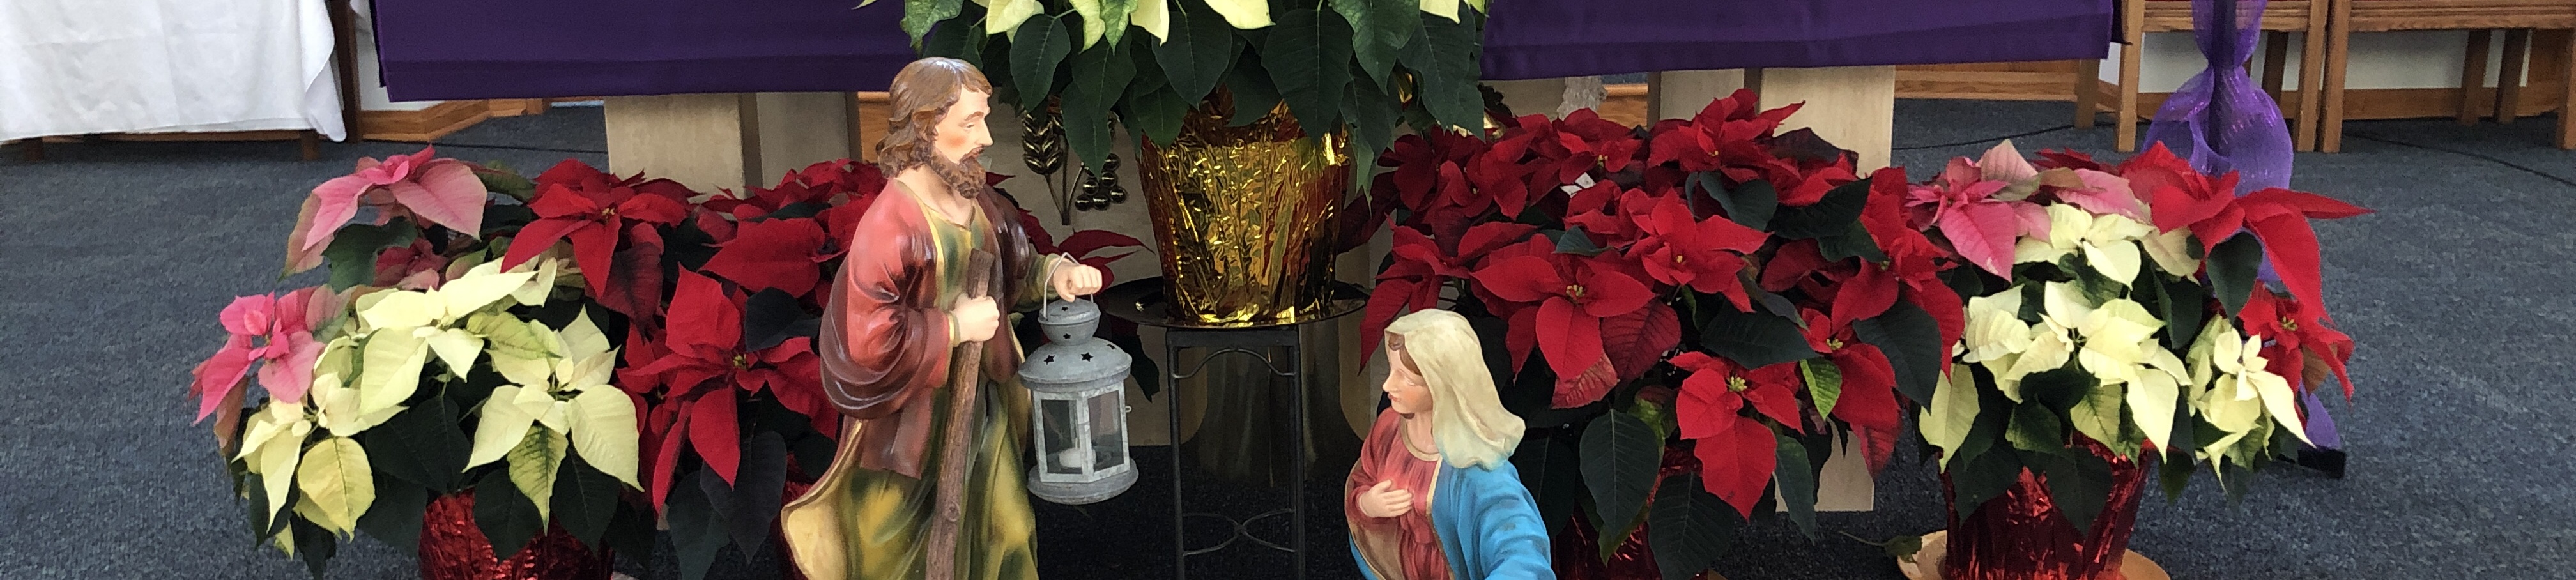 SM Christmas Sanctuary cropped